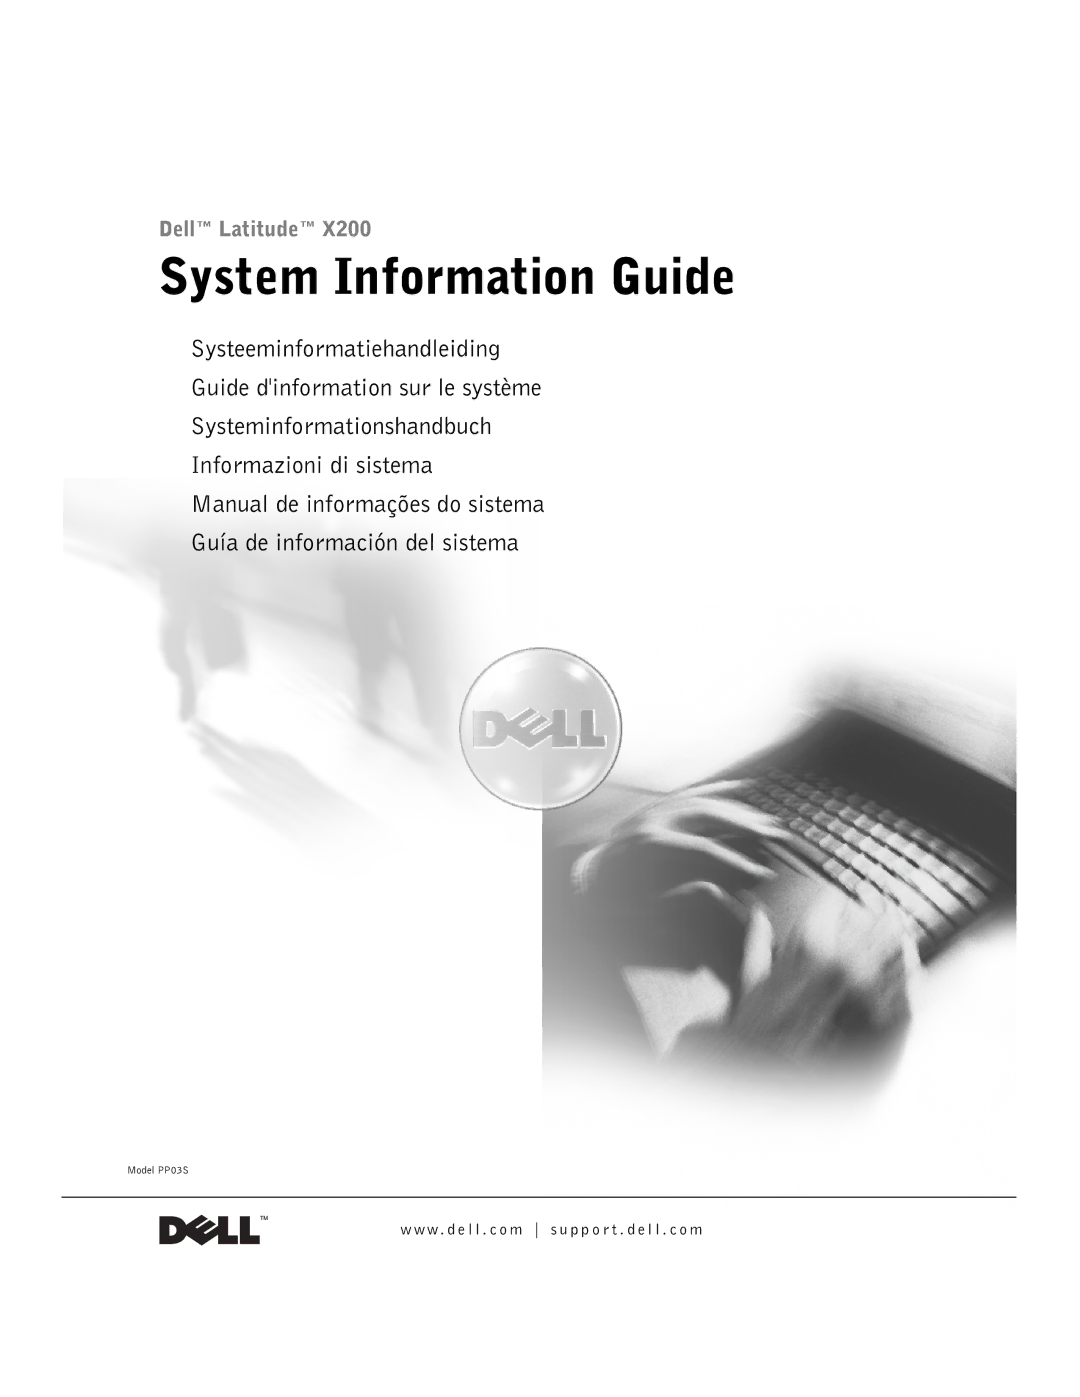 LeapFrog PP03S manual System Information Guide, W . d e l l . c o m s u p p o r t . d e l l . c o m 